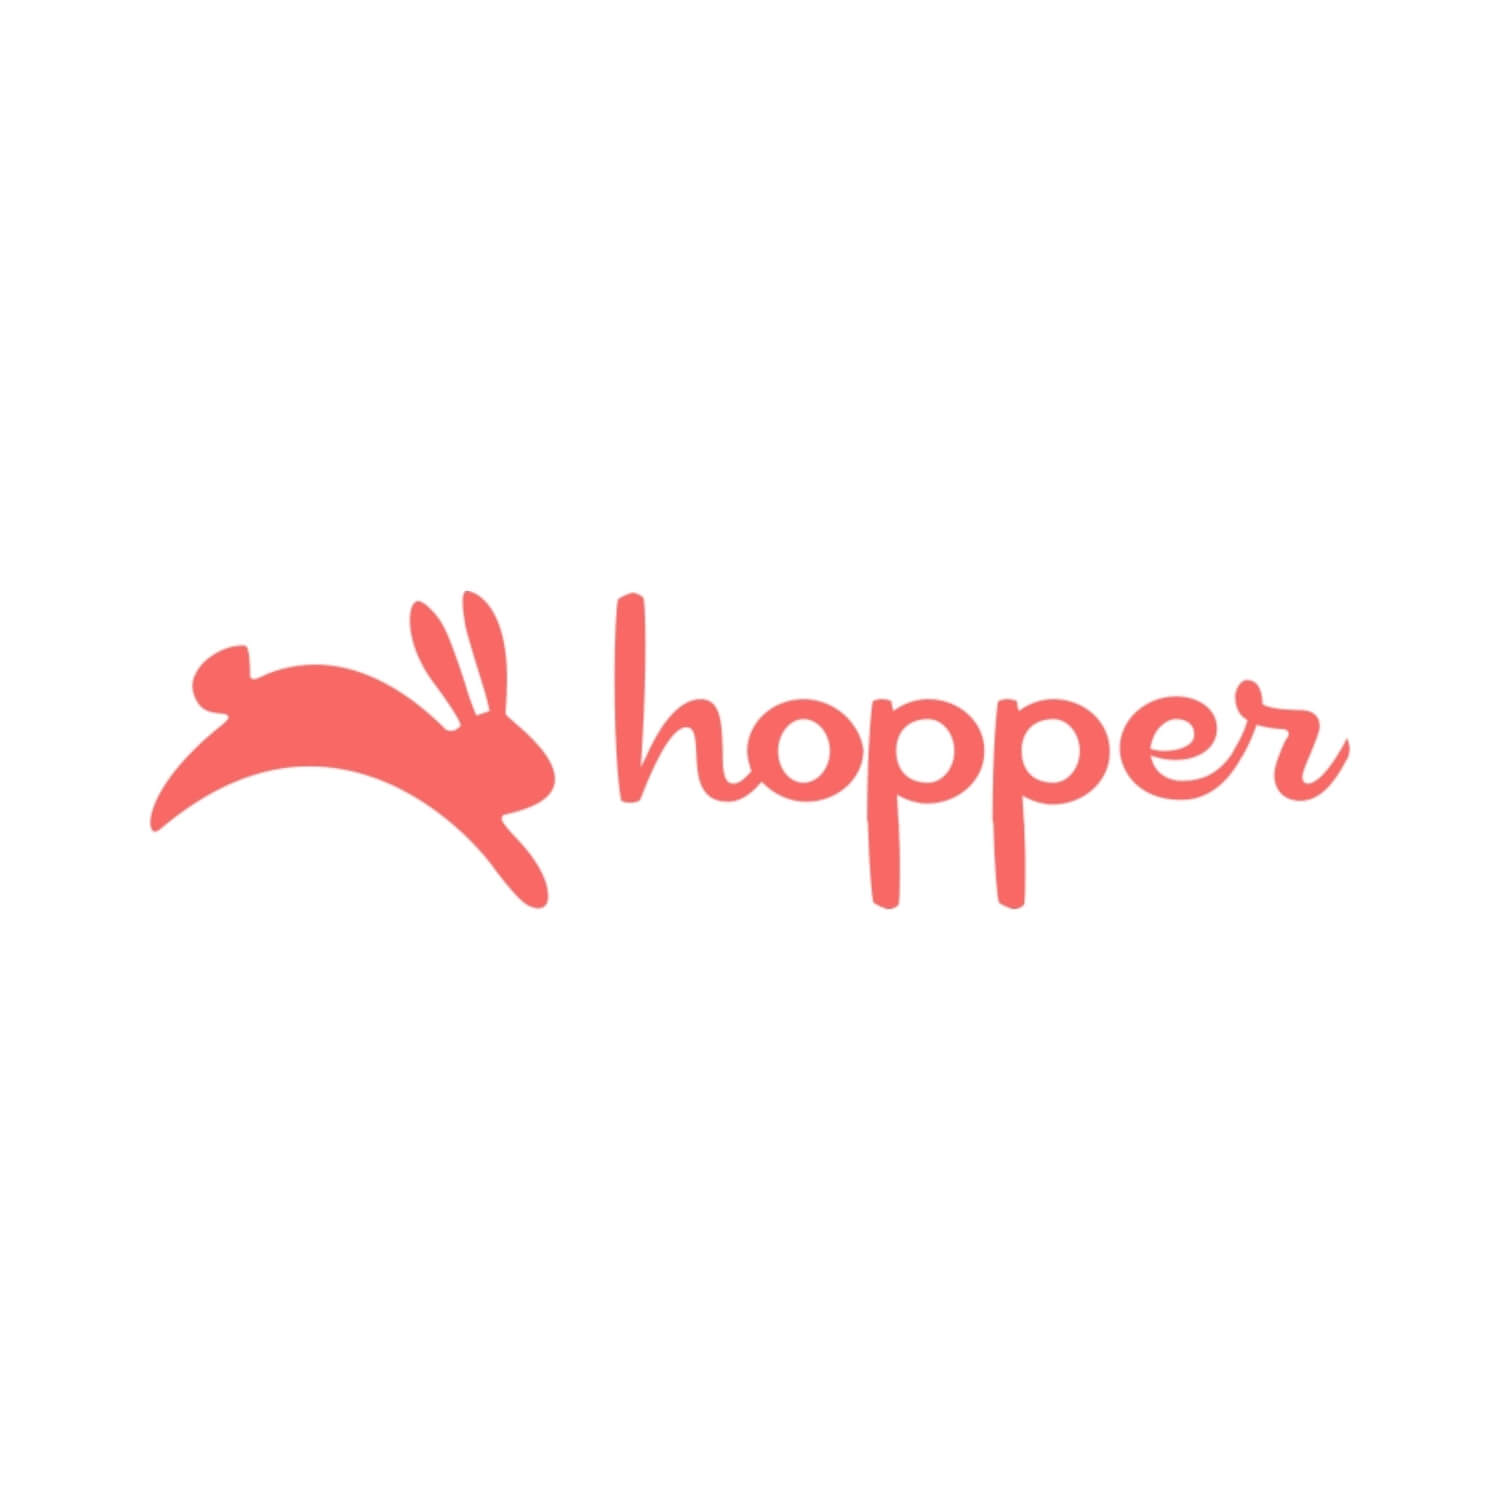 Hopper Referral Code: £20 off hotels